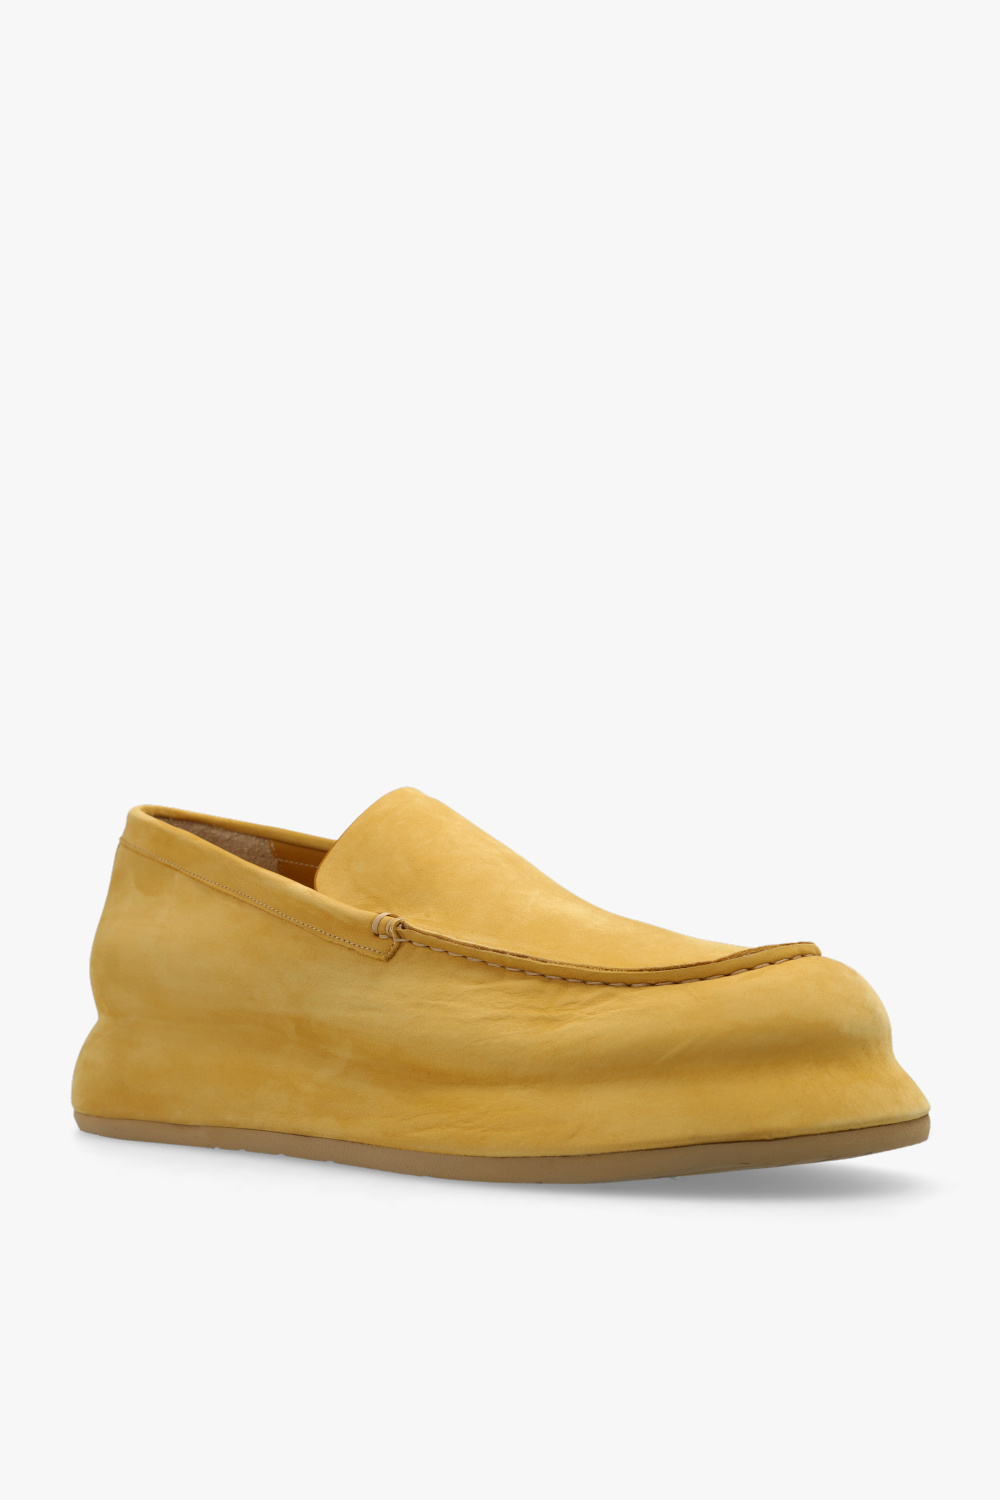 Jacquemus ‘Bricciola’ suede shoes